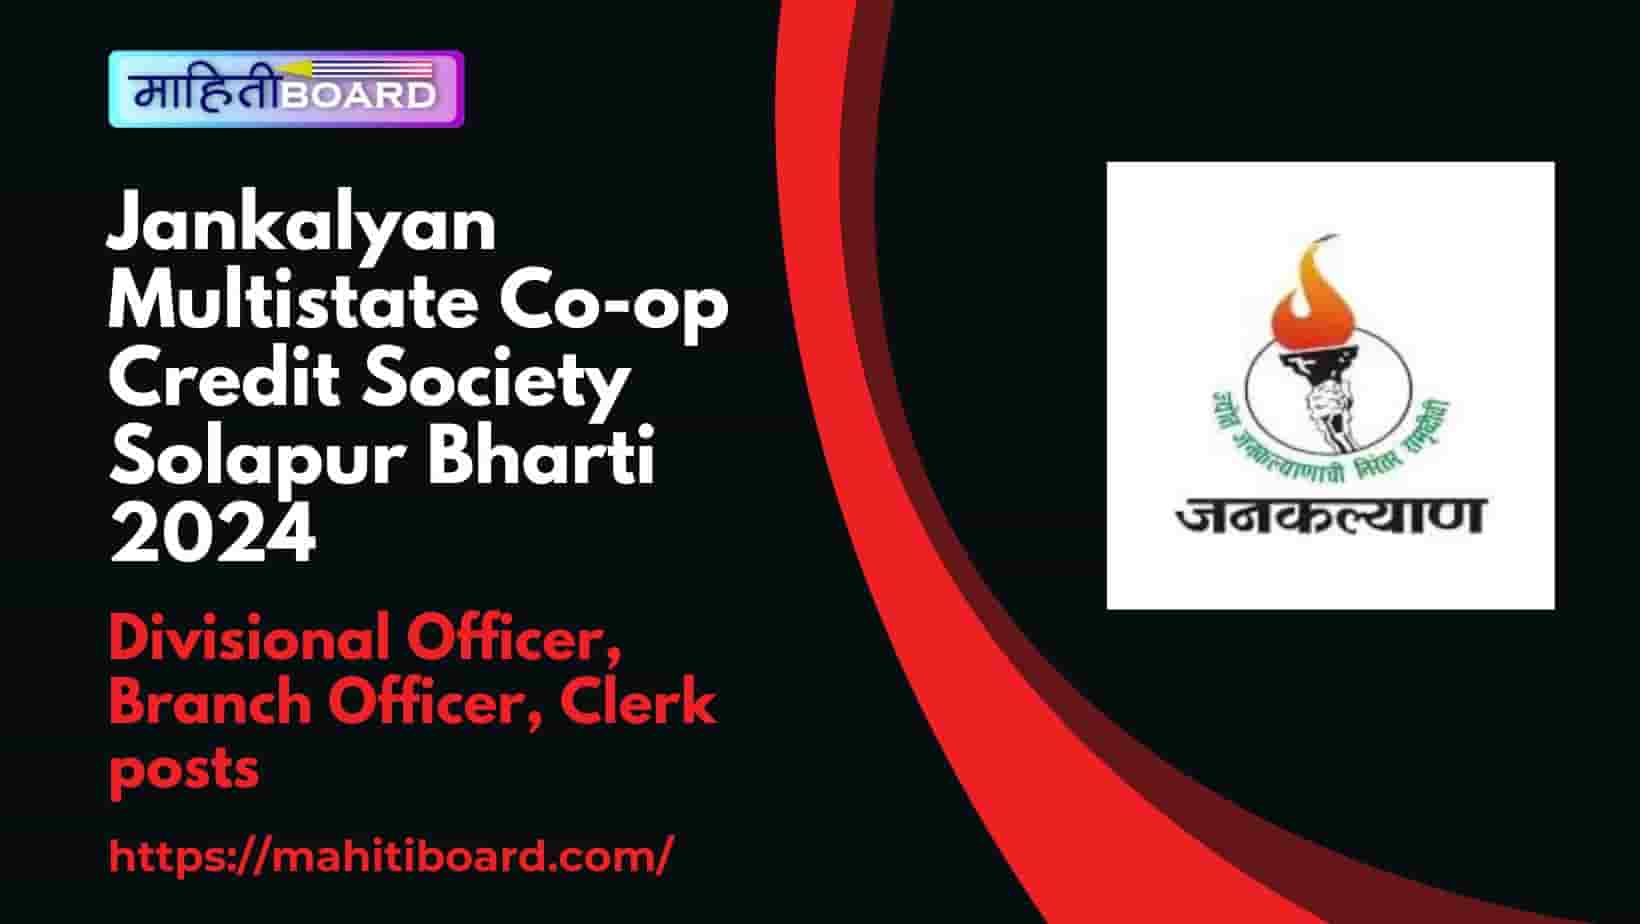 Jankalyan Multistate Co-op Credit Society Solapur Bharti 2024